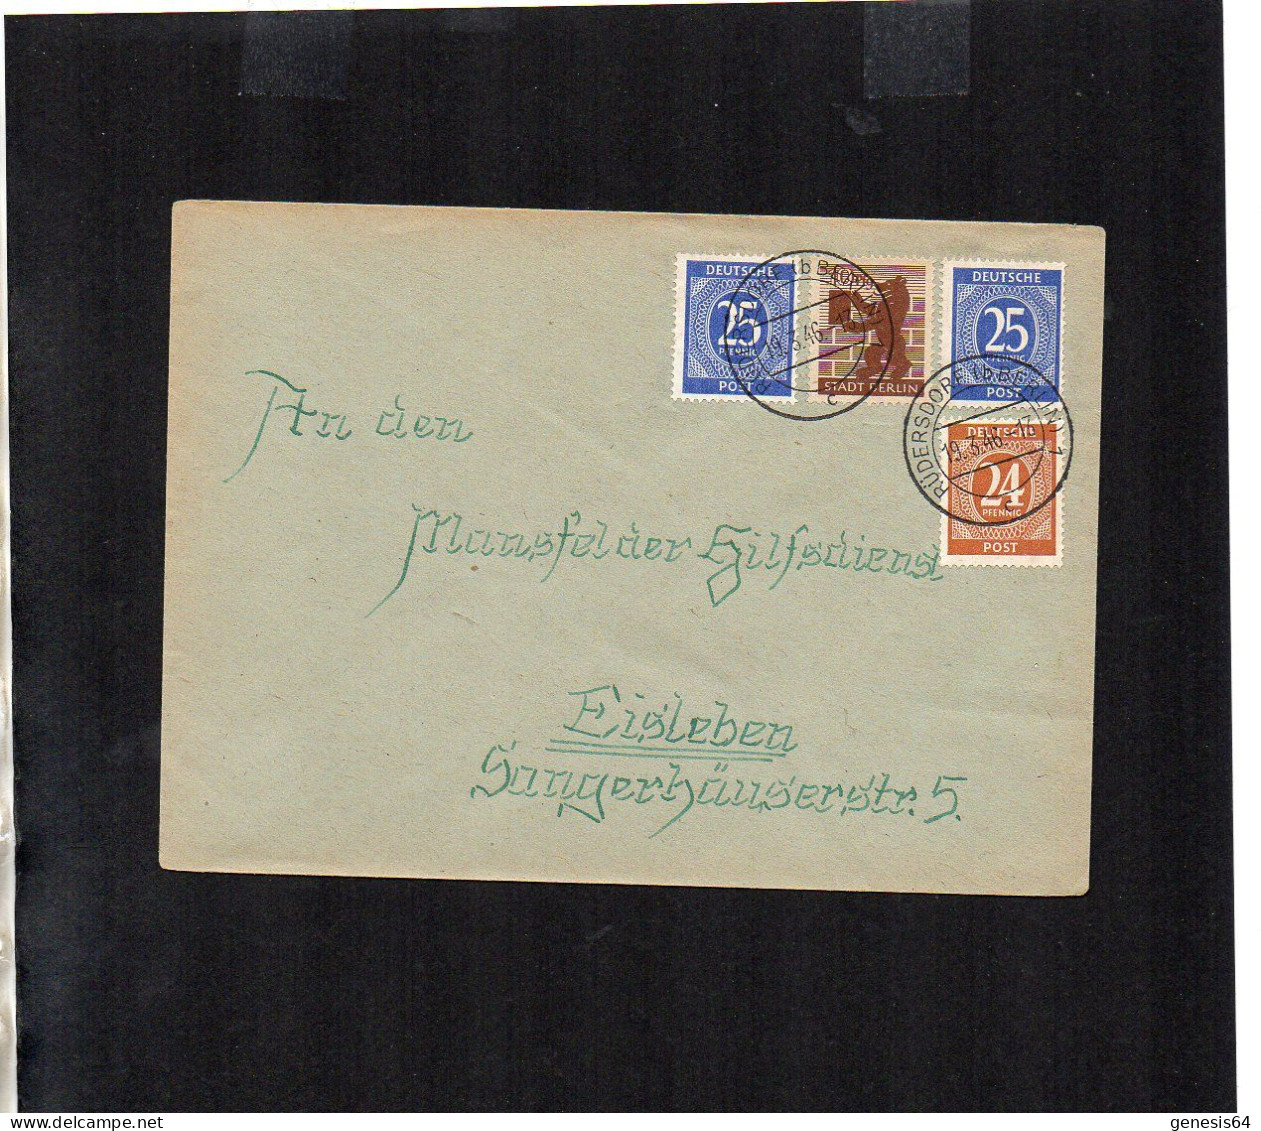 Berlin Brandenburg - Brief Mit Mischfrankatur - Rüdersdorf - 19.3.46 - P2 (1ZKSBZ062) - Berlin & Brandebourg